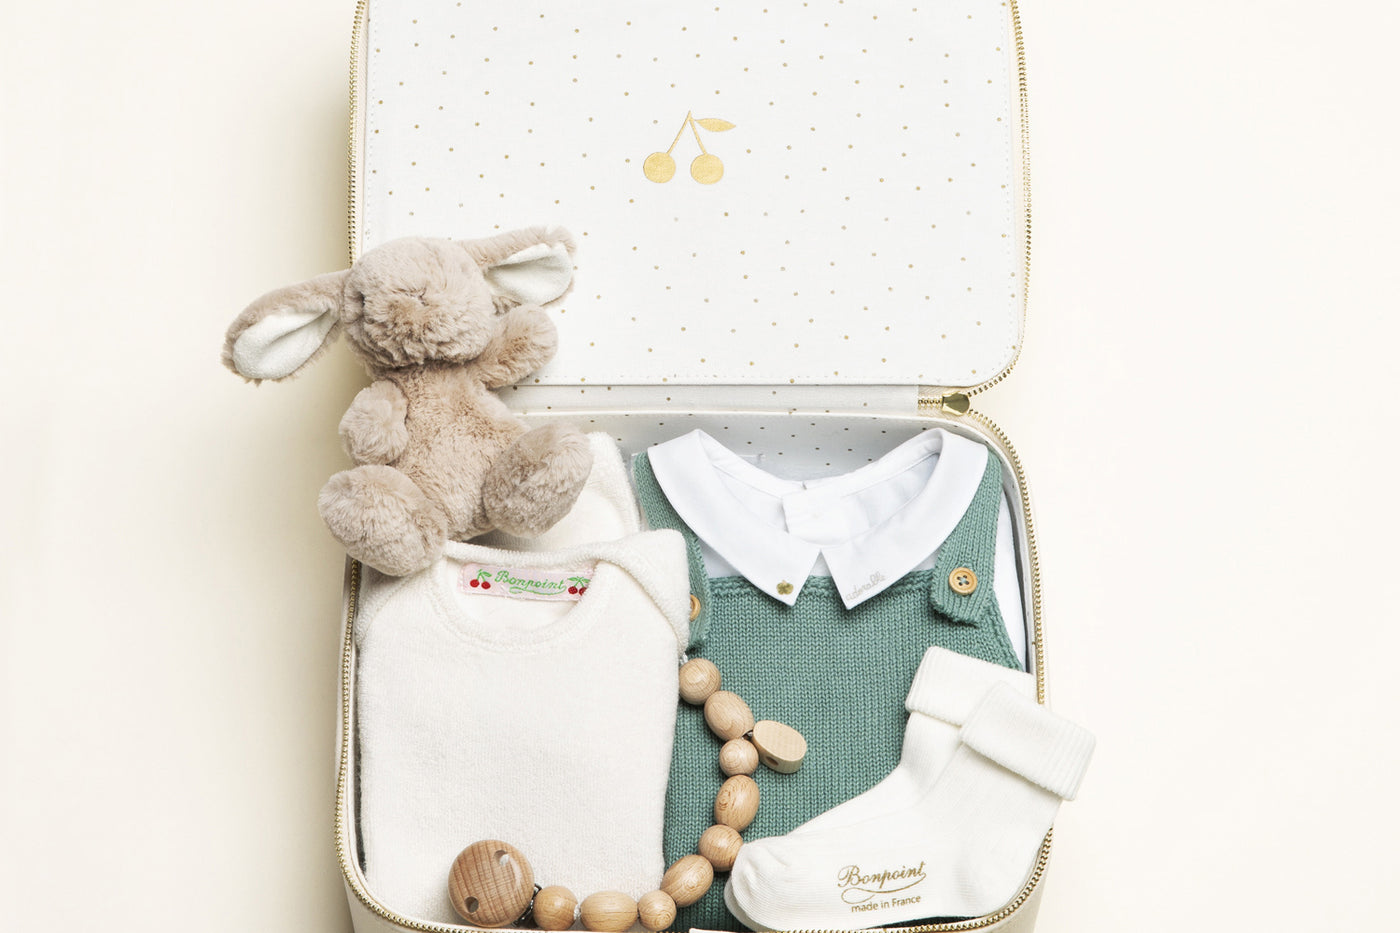 Medium birth suitcase for boys